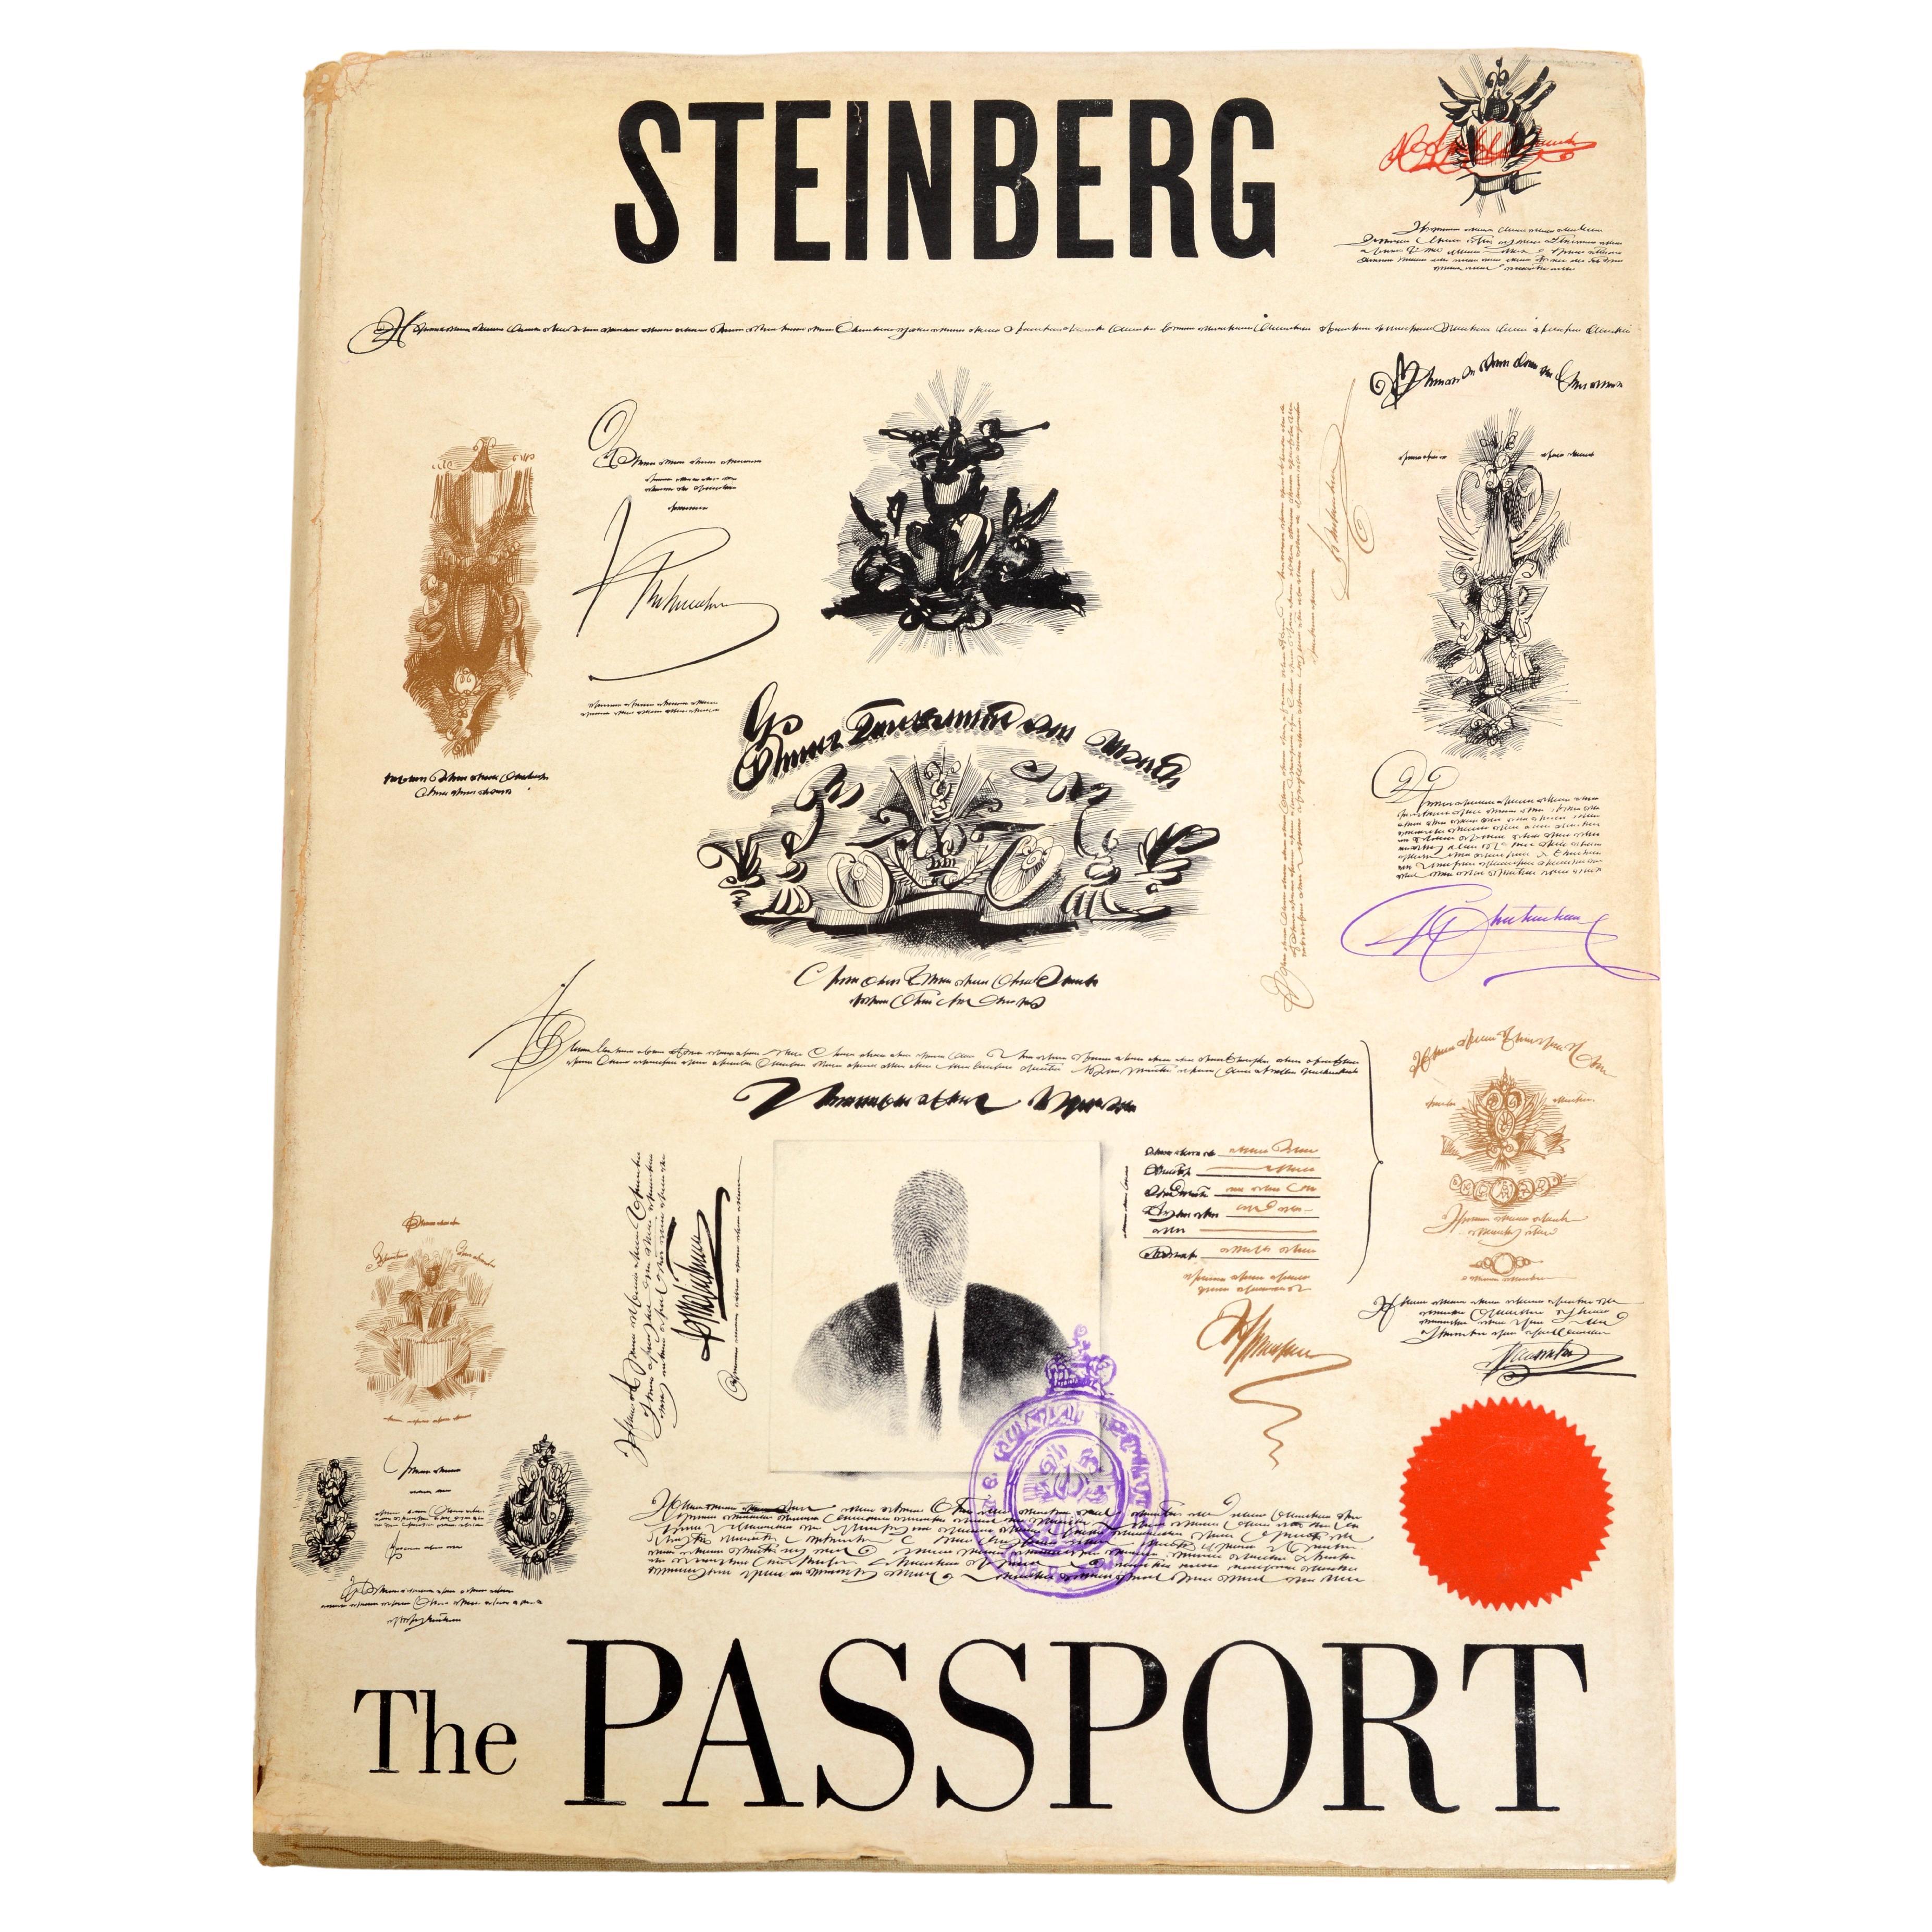 Saul Steinberg: The Passport by Saul Steinberg